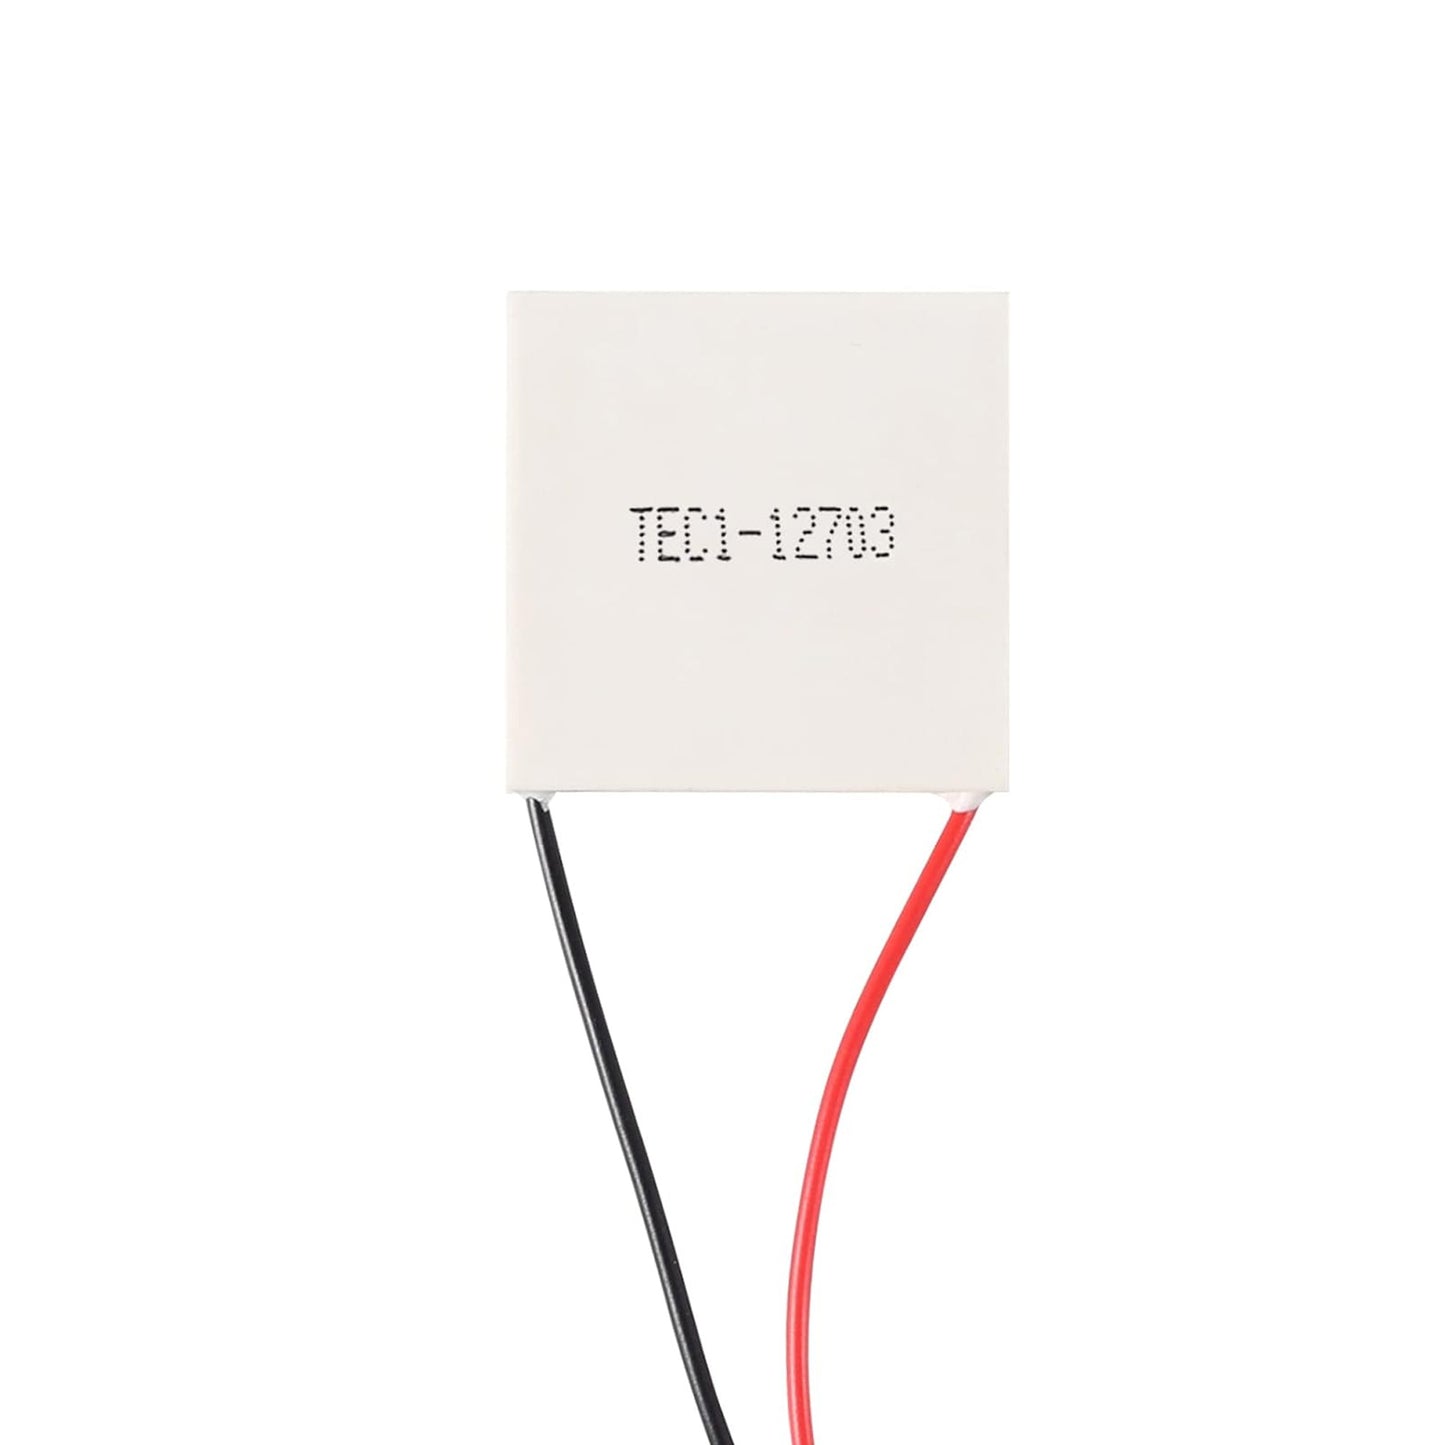 TEC1-12703 Thermoelectric Cooler Peltier Plate Module 30x30mm 3A 12703 Peltier Module - NA176 - REES52